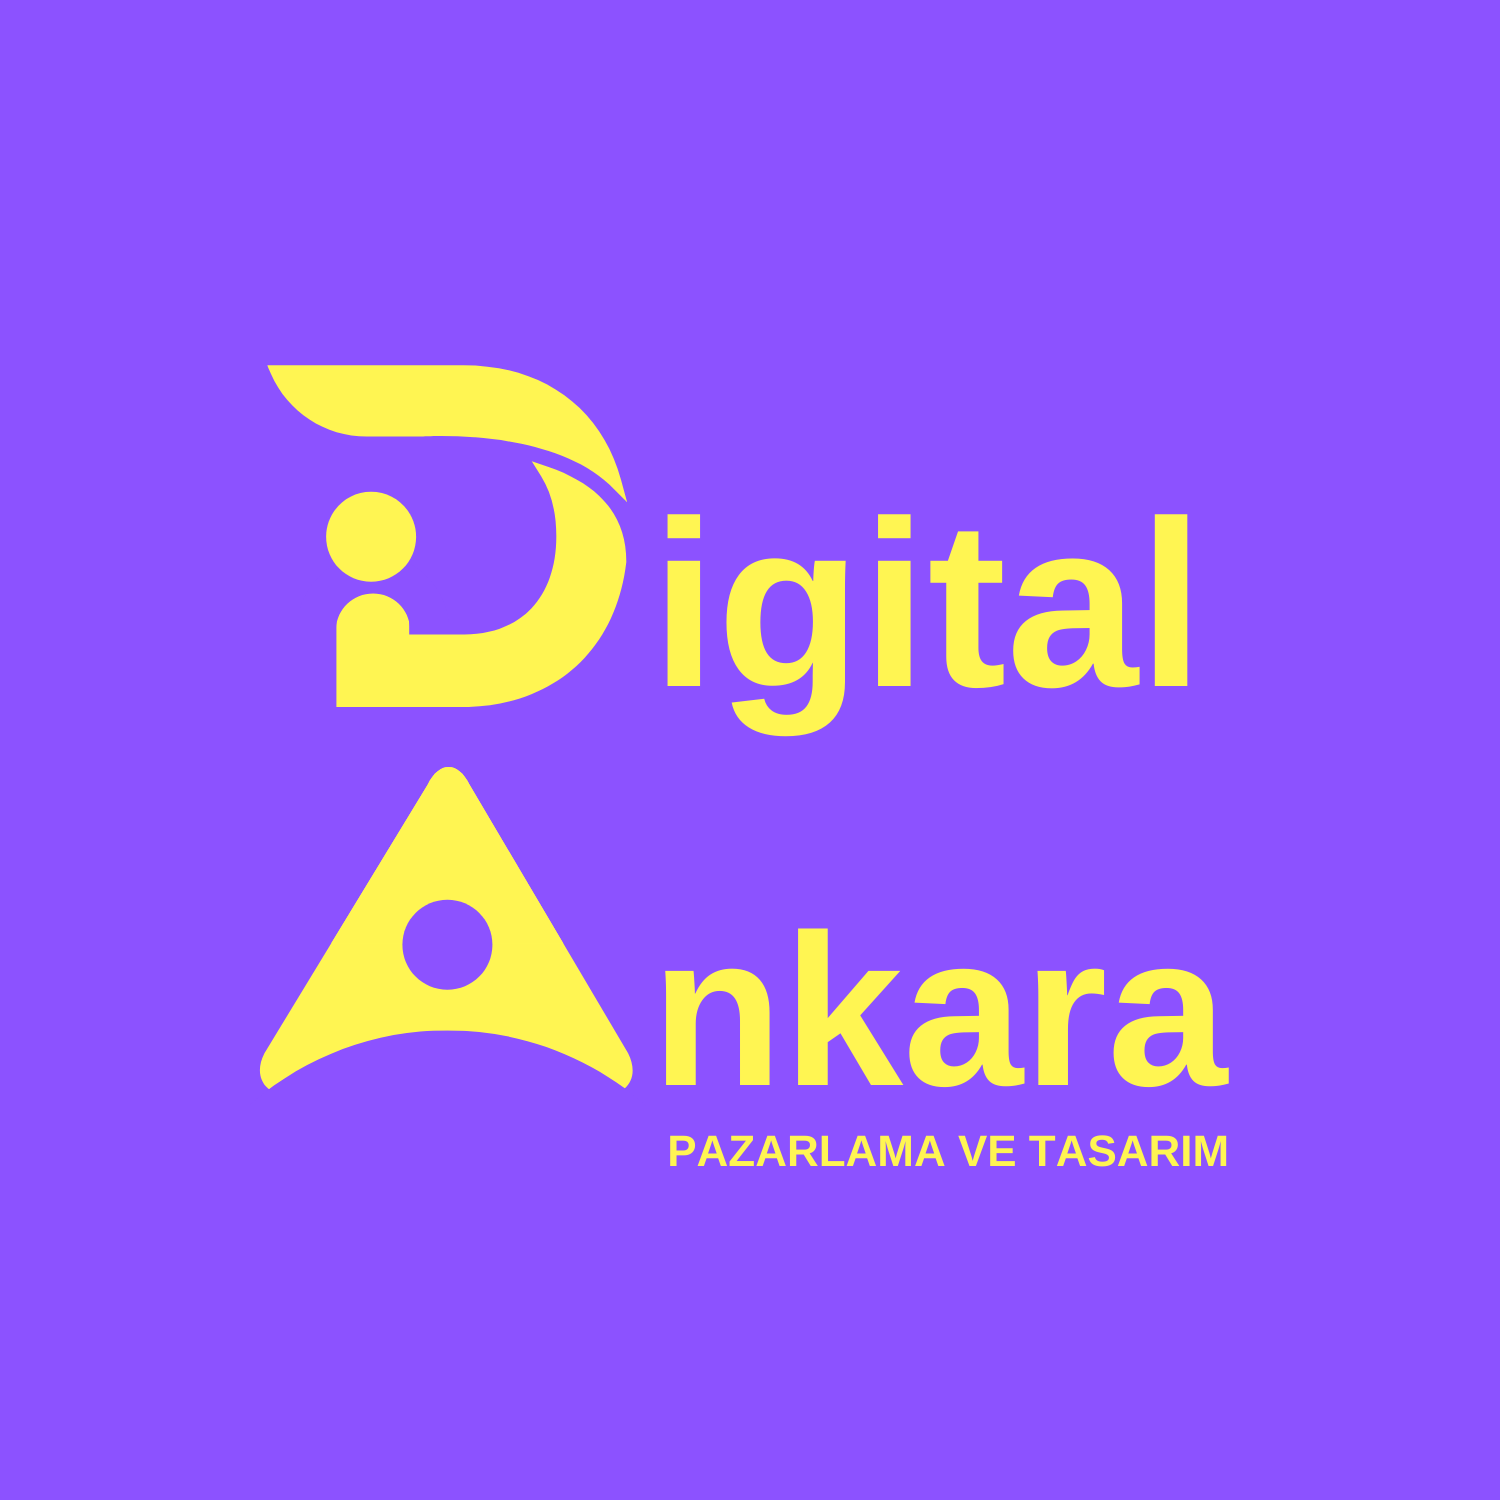 Dijital Ankara